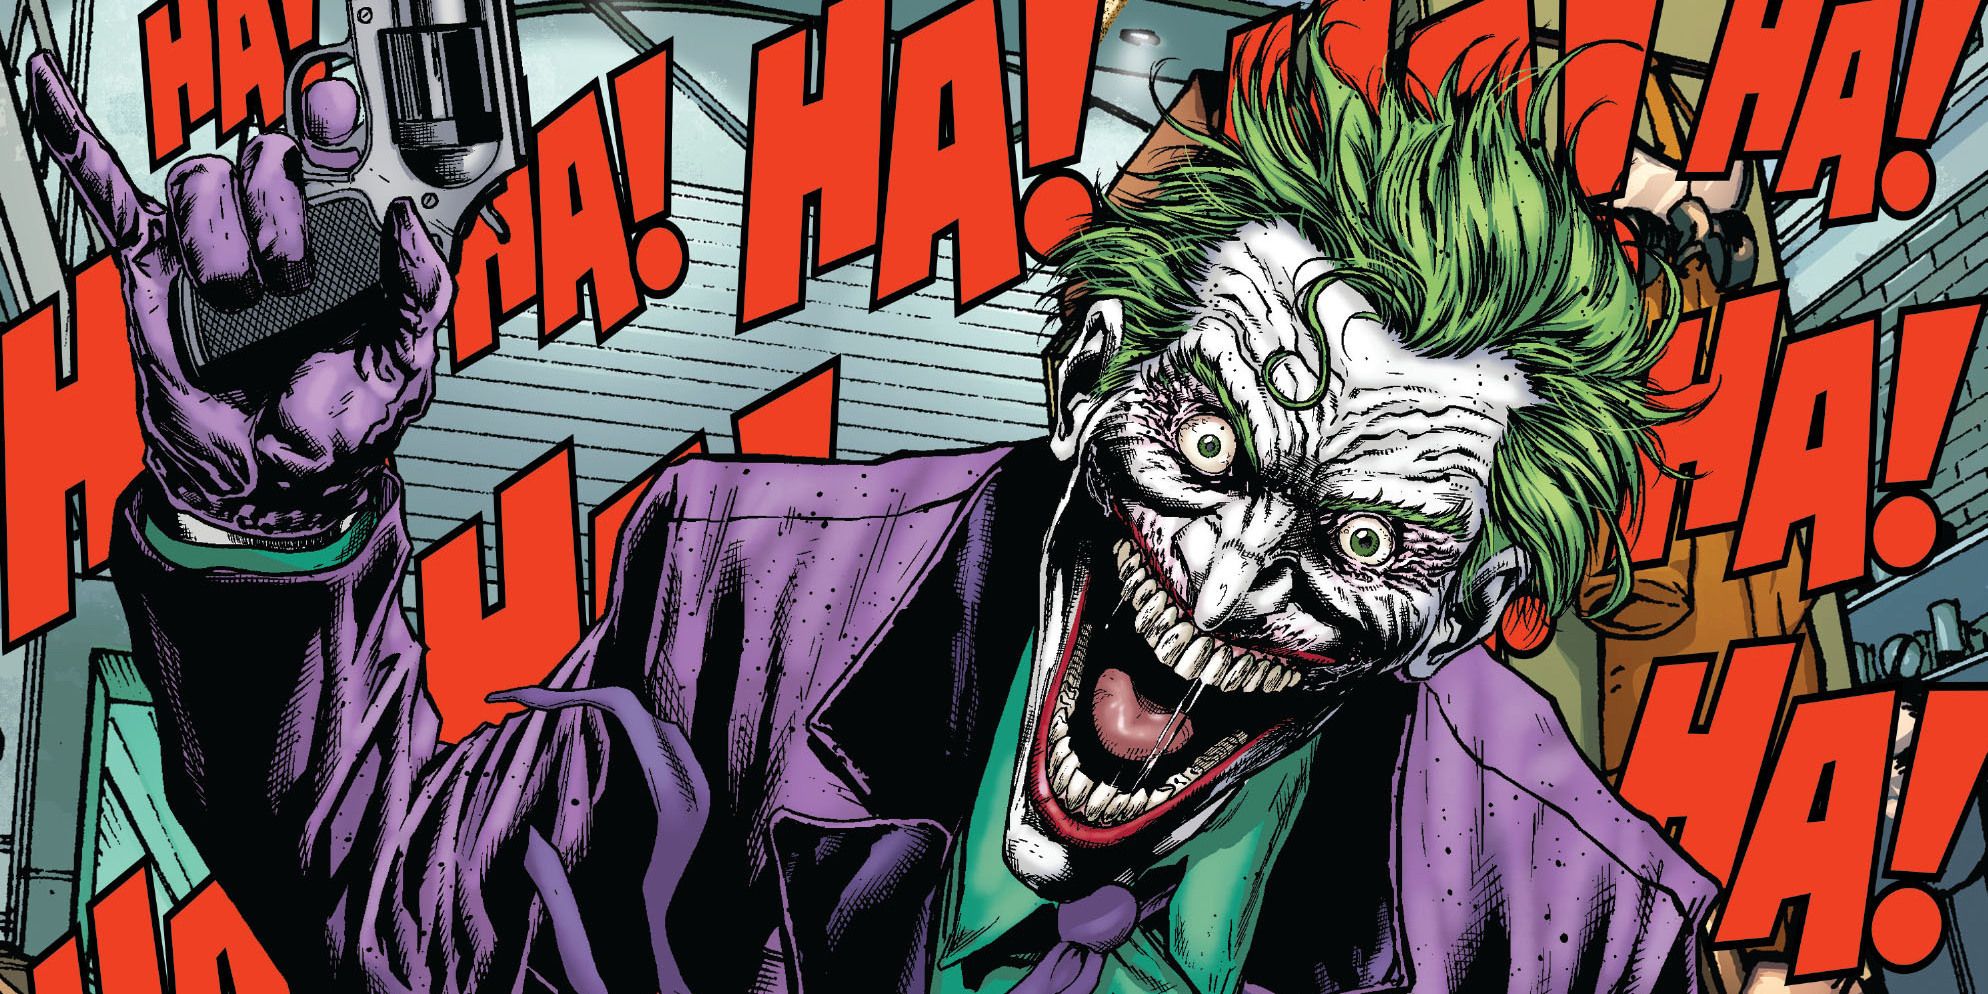 Comic book joker laughing maniacally